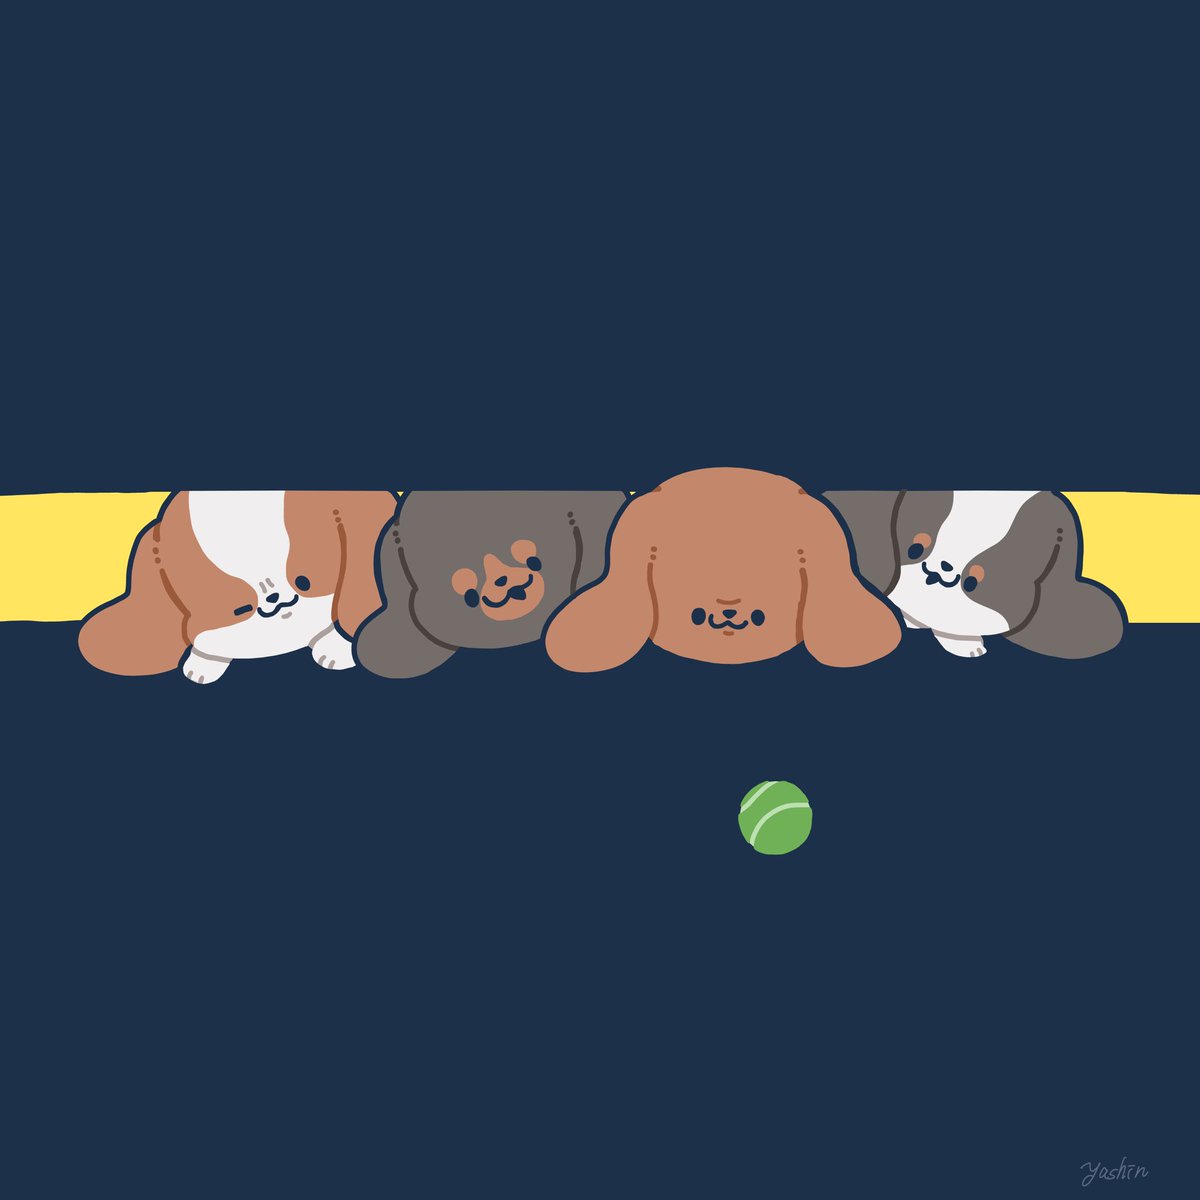 no humans animal focus ball dog :3 animal artist name  illustration images